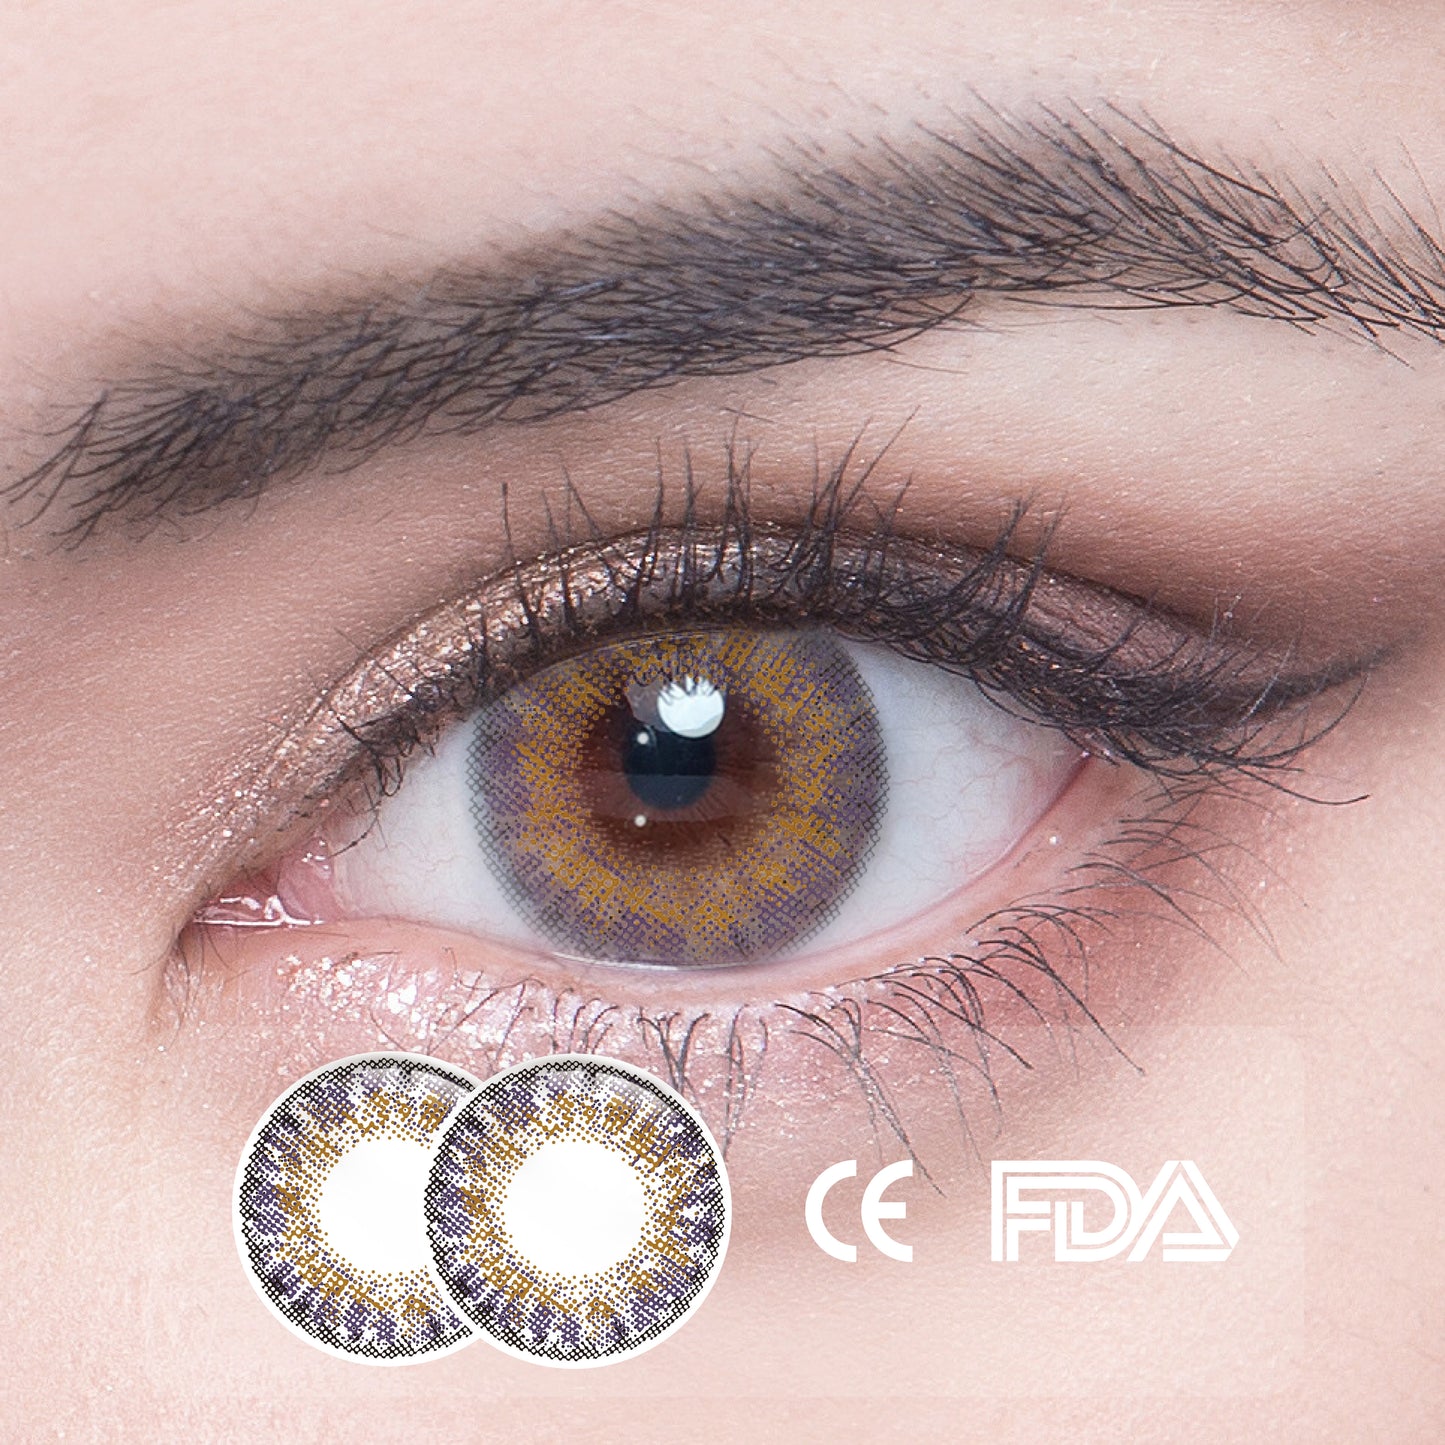 1Pcs FDA Certificate Eyes Colorful Contact Lenses - Gemstone Violet